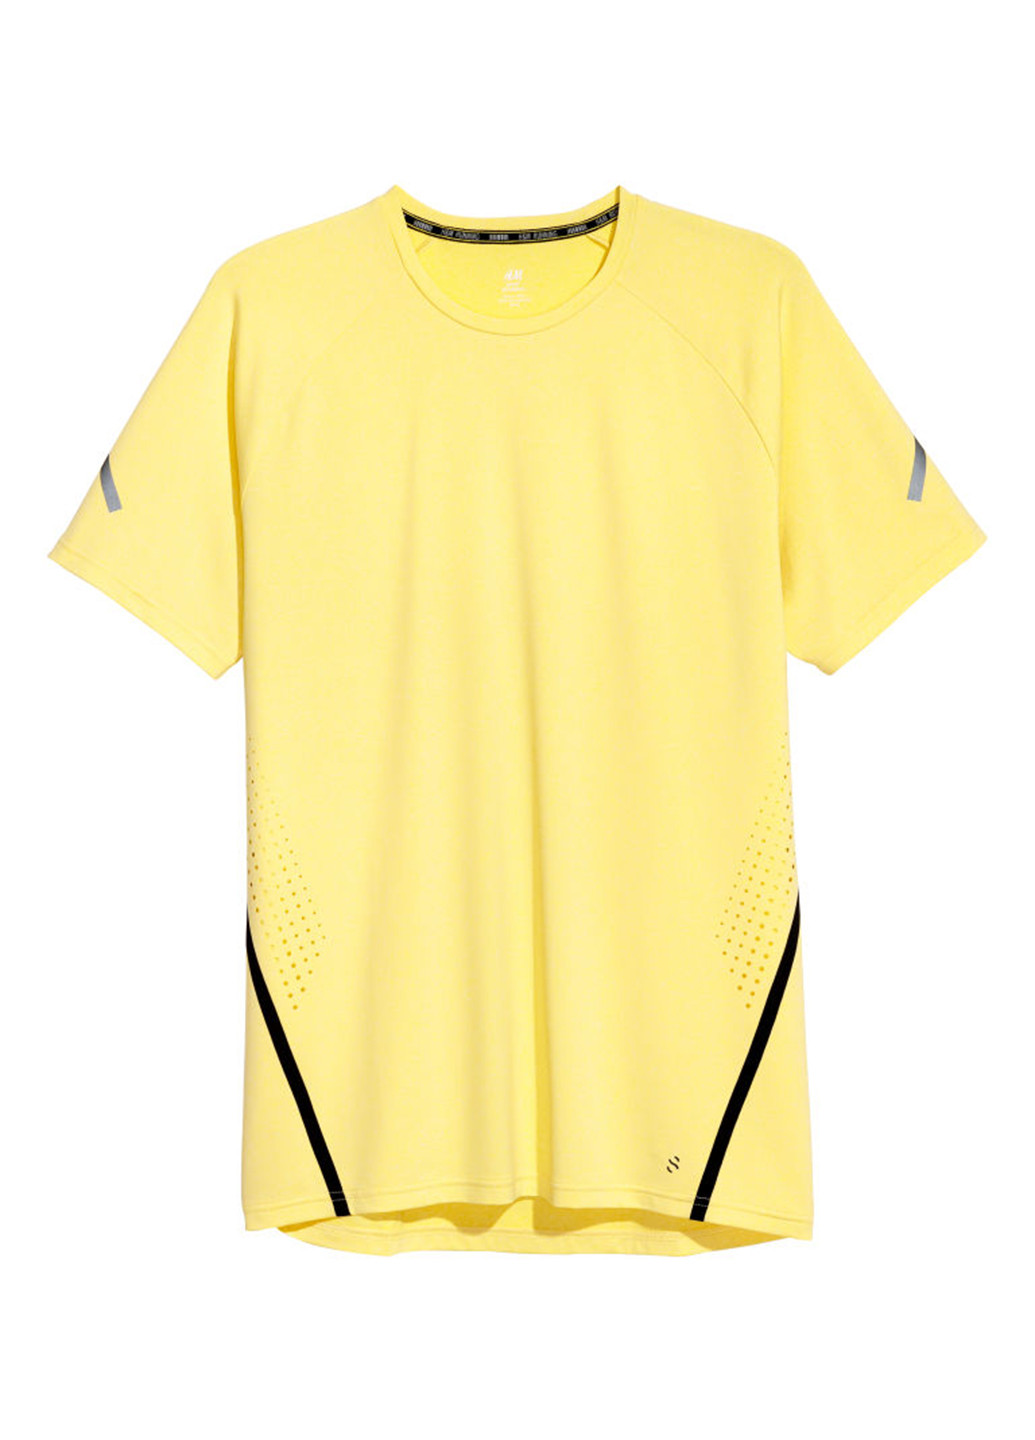 Желтая летняя футболка с коротким рукавом H&M